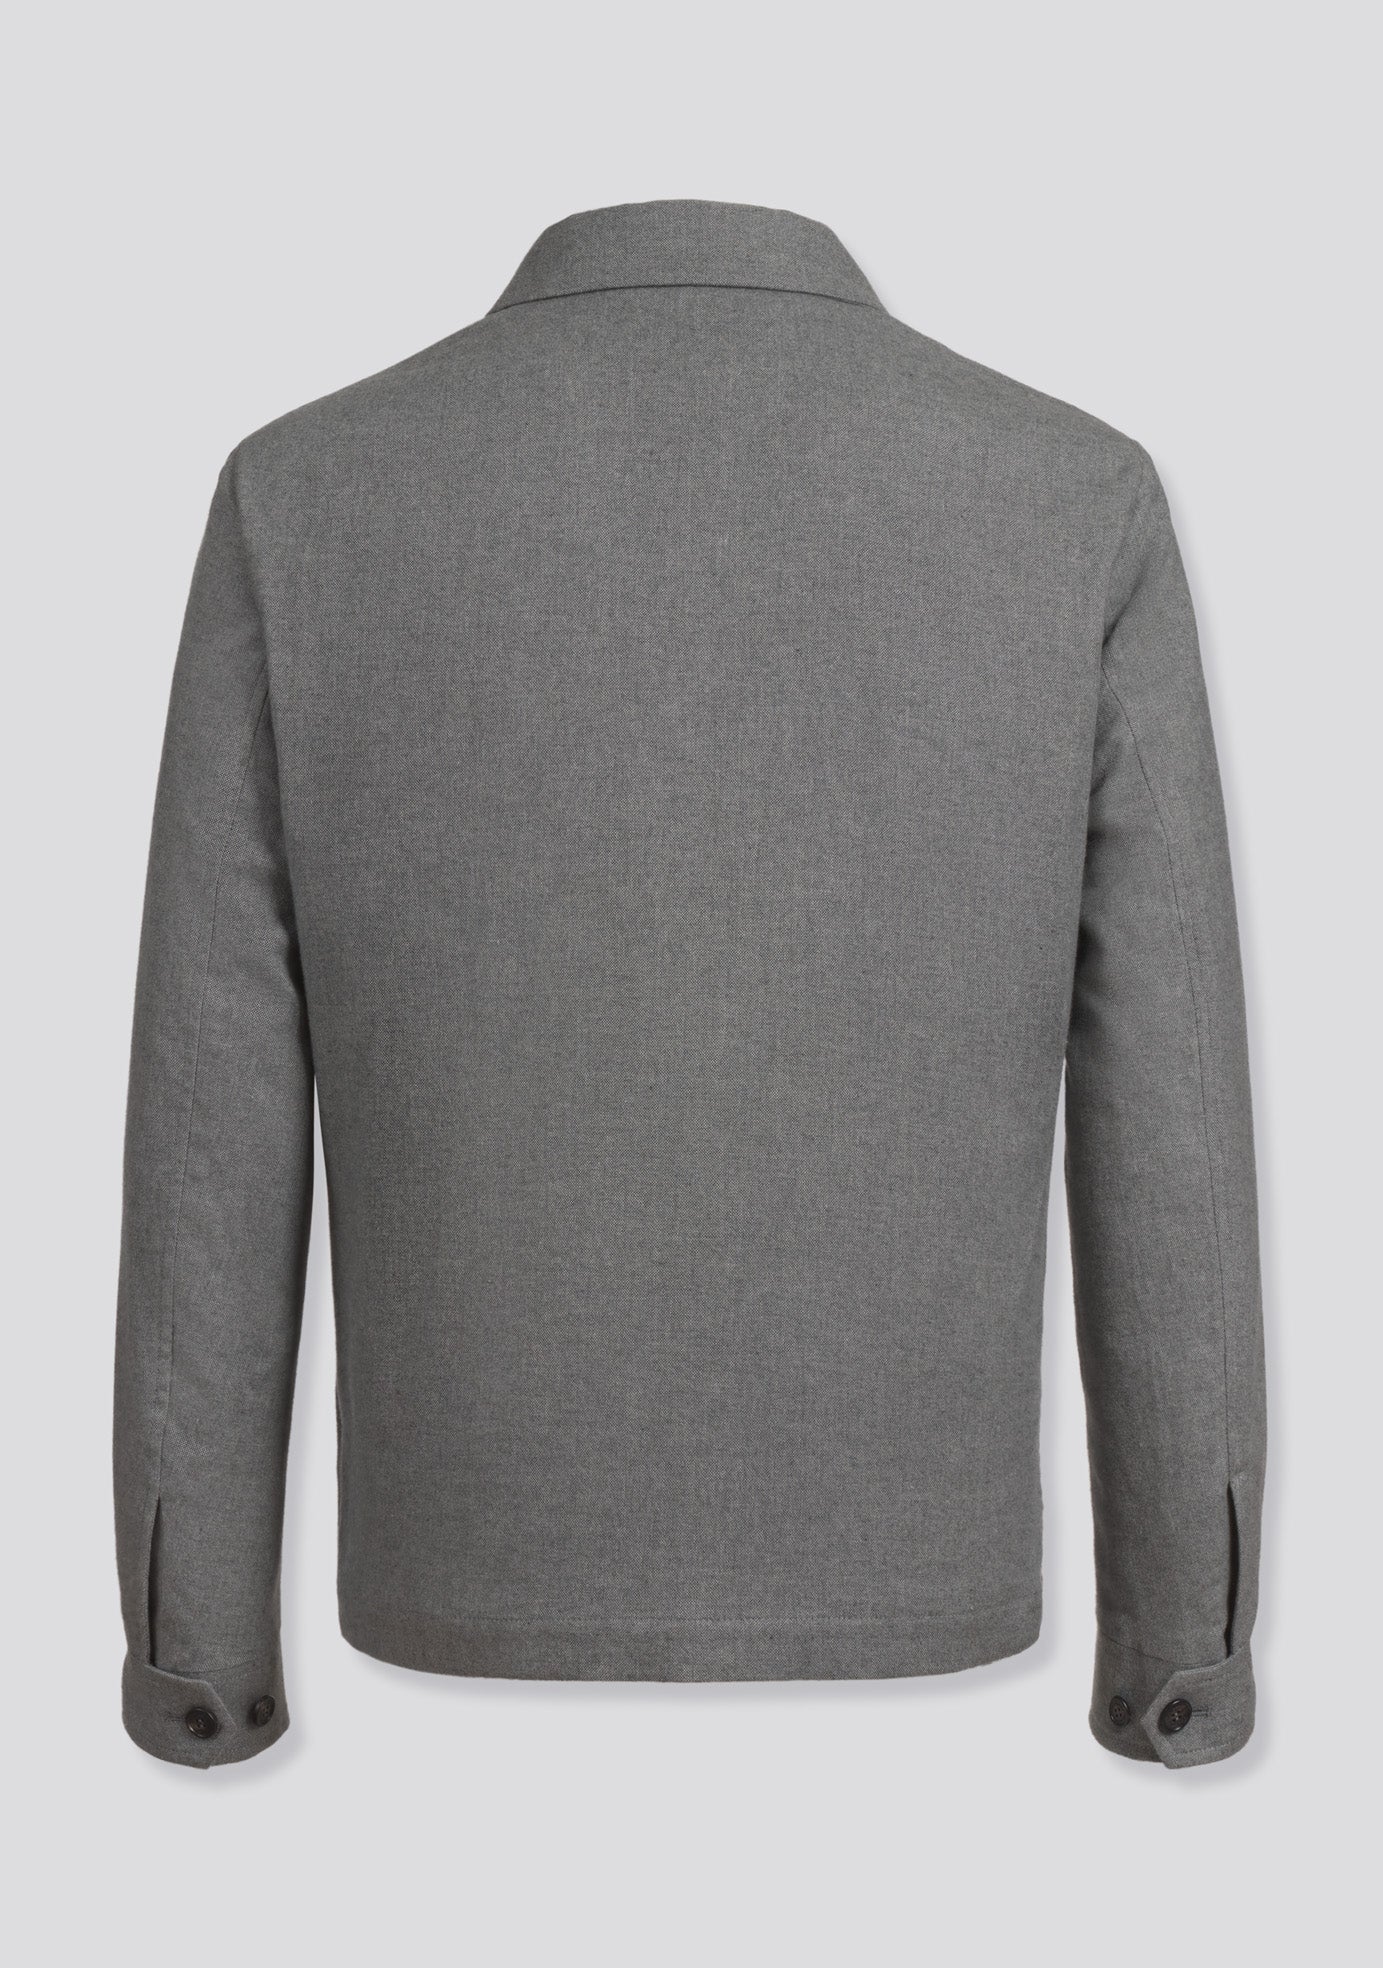 Ash Grey Cotton Button up Jacket